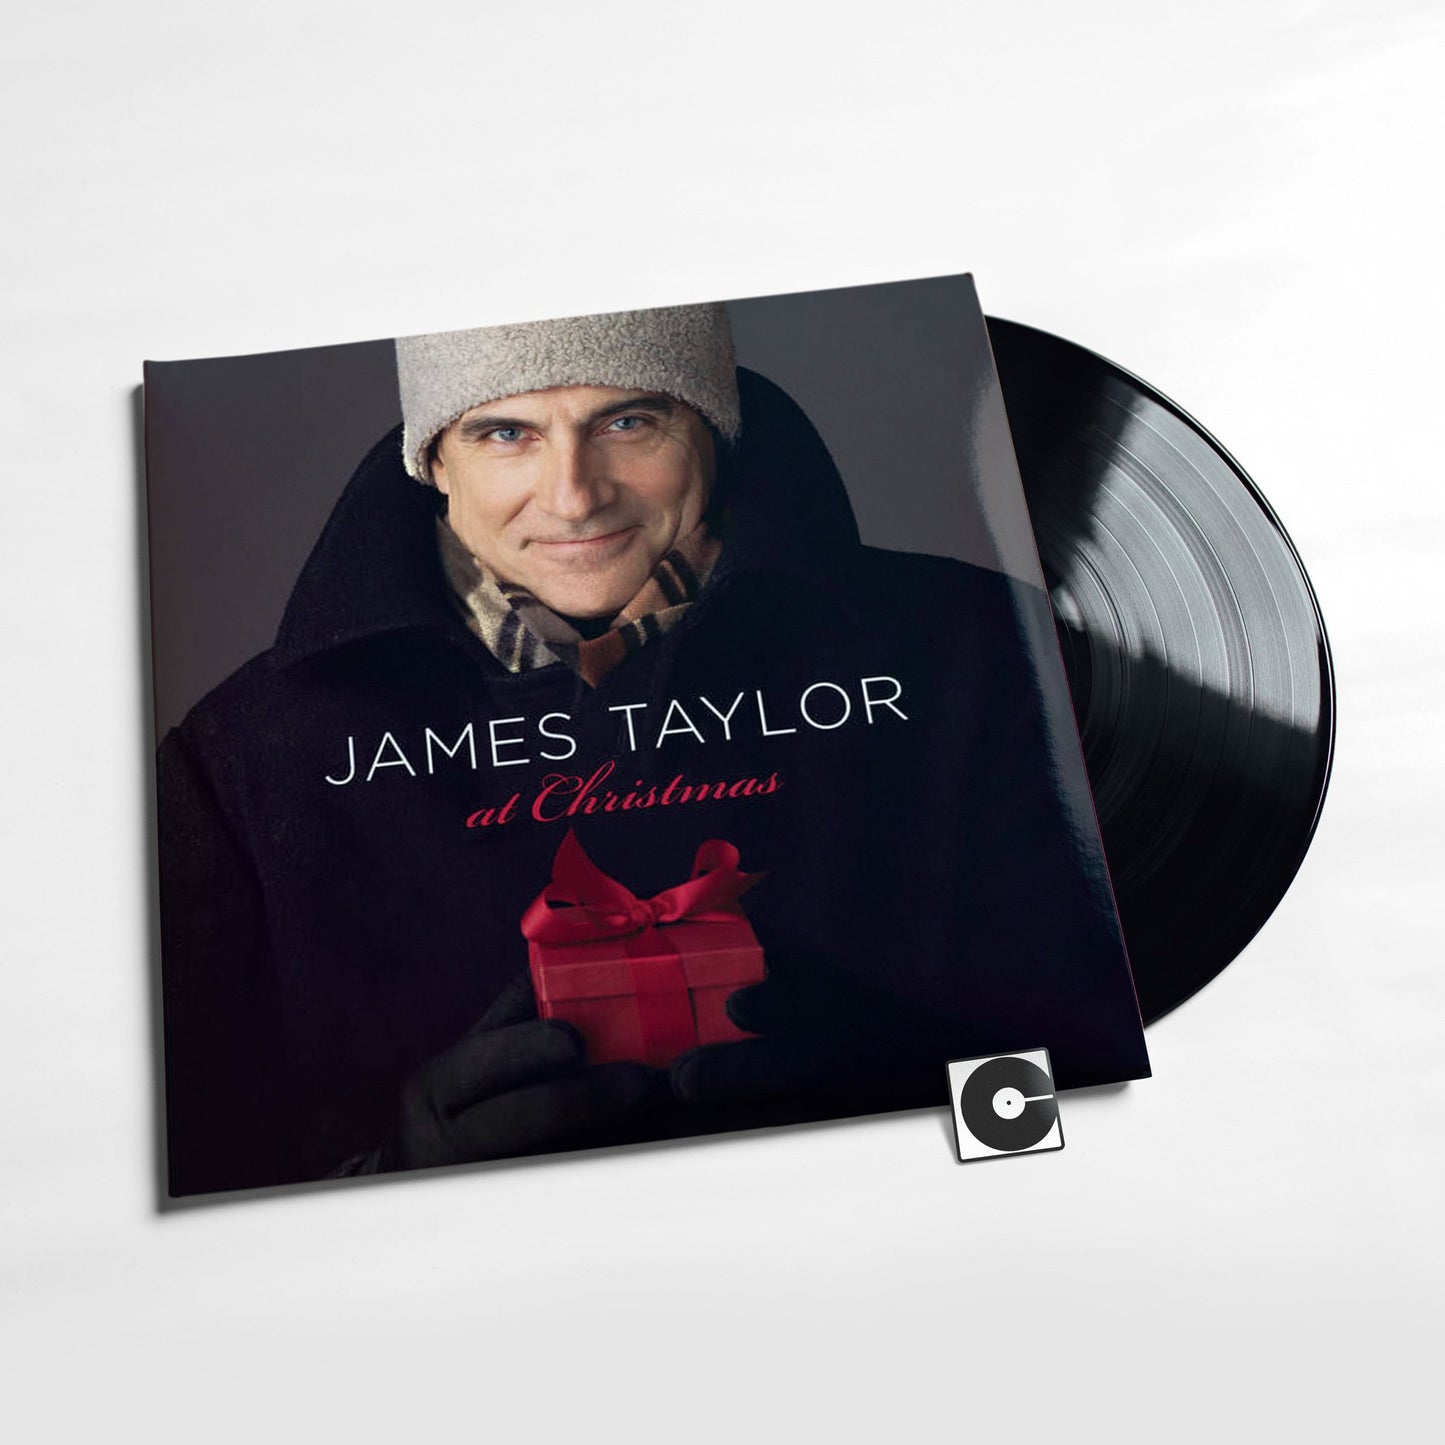 James Taylor - "At Christmas"